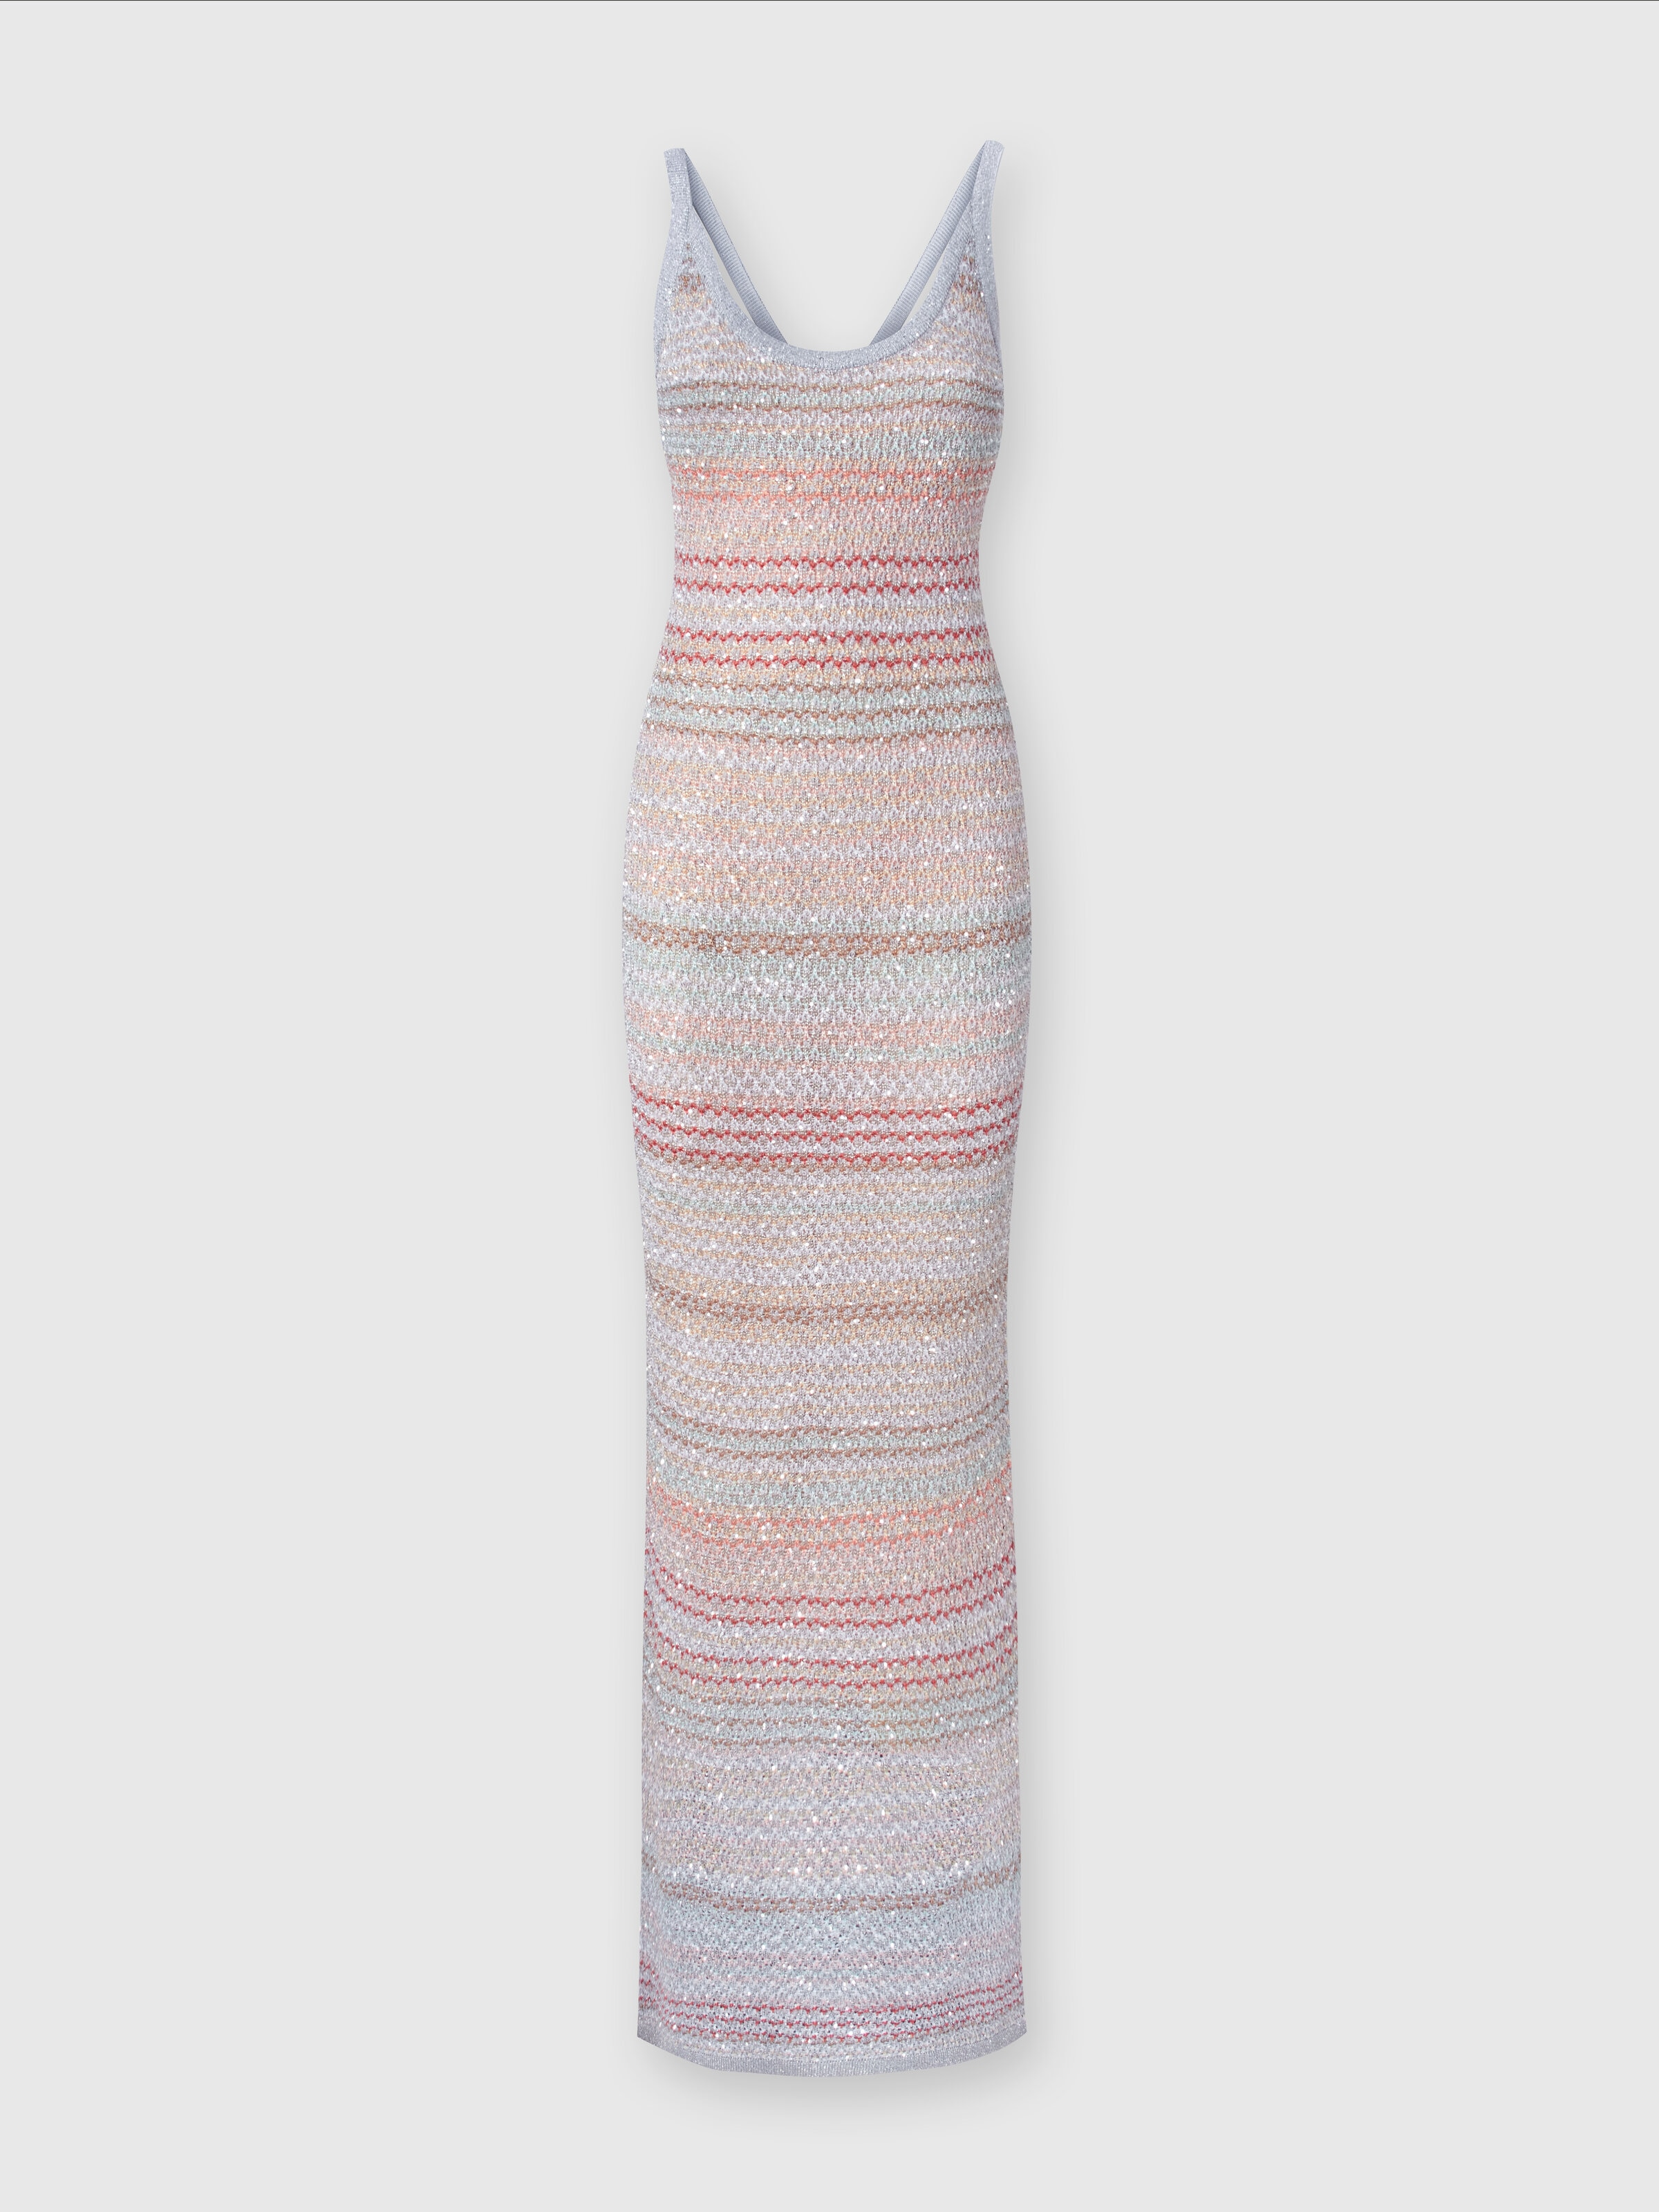 Long dress in zigzag knit with crochet-effect weave, Multicoloured  - 0